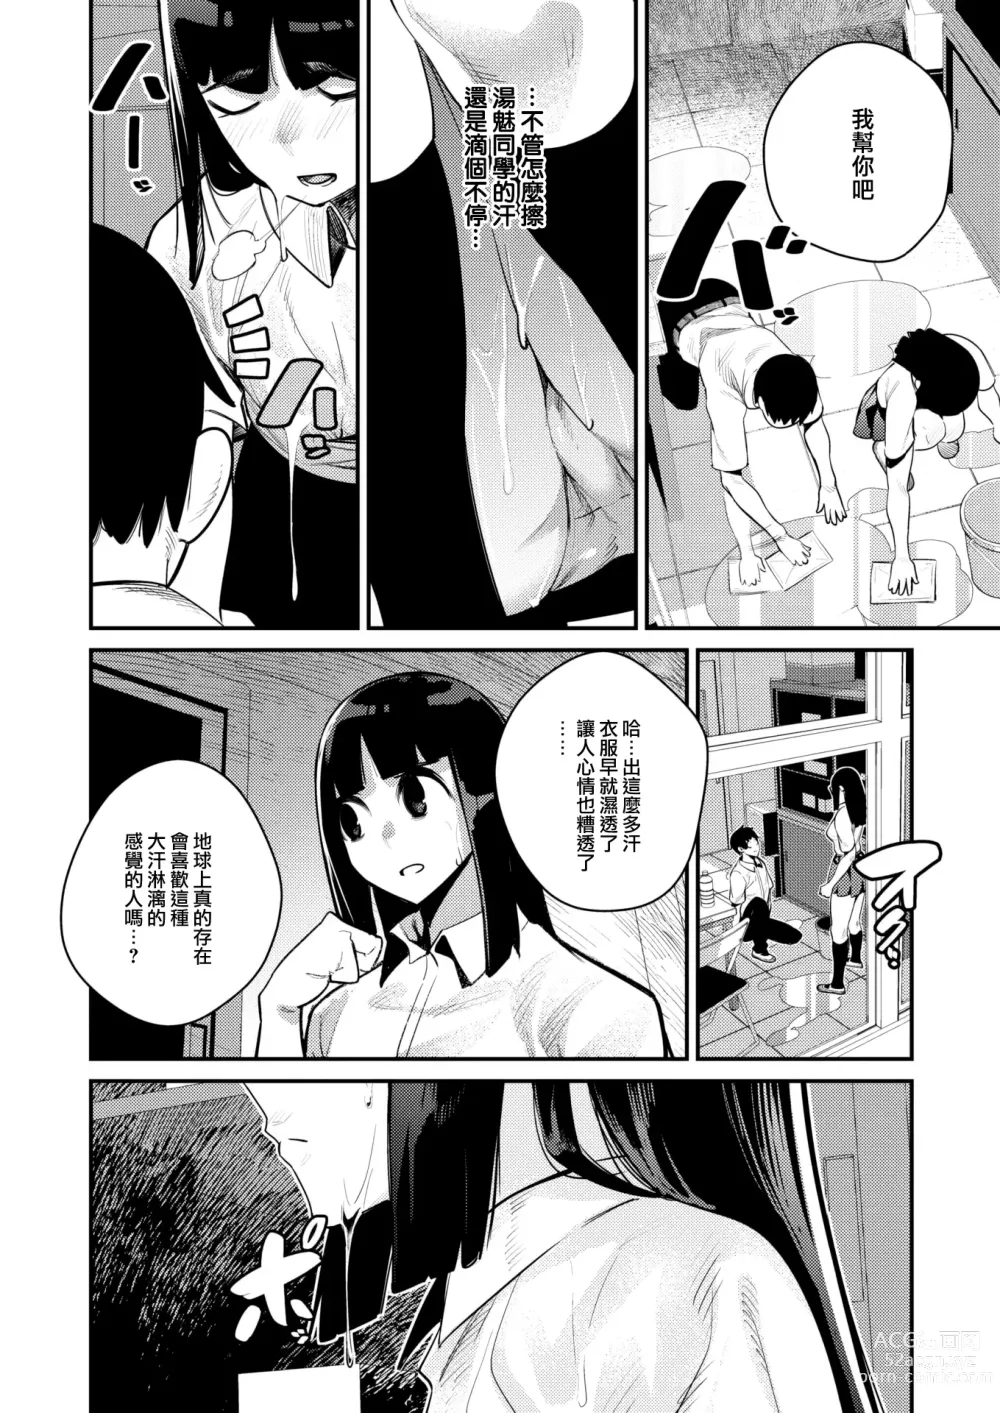 Page 5 of manga Kaijin Netsuai Mokushiroku